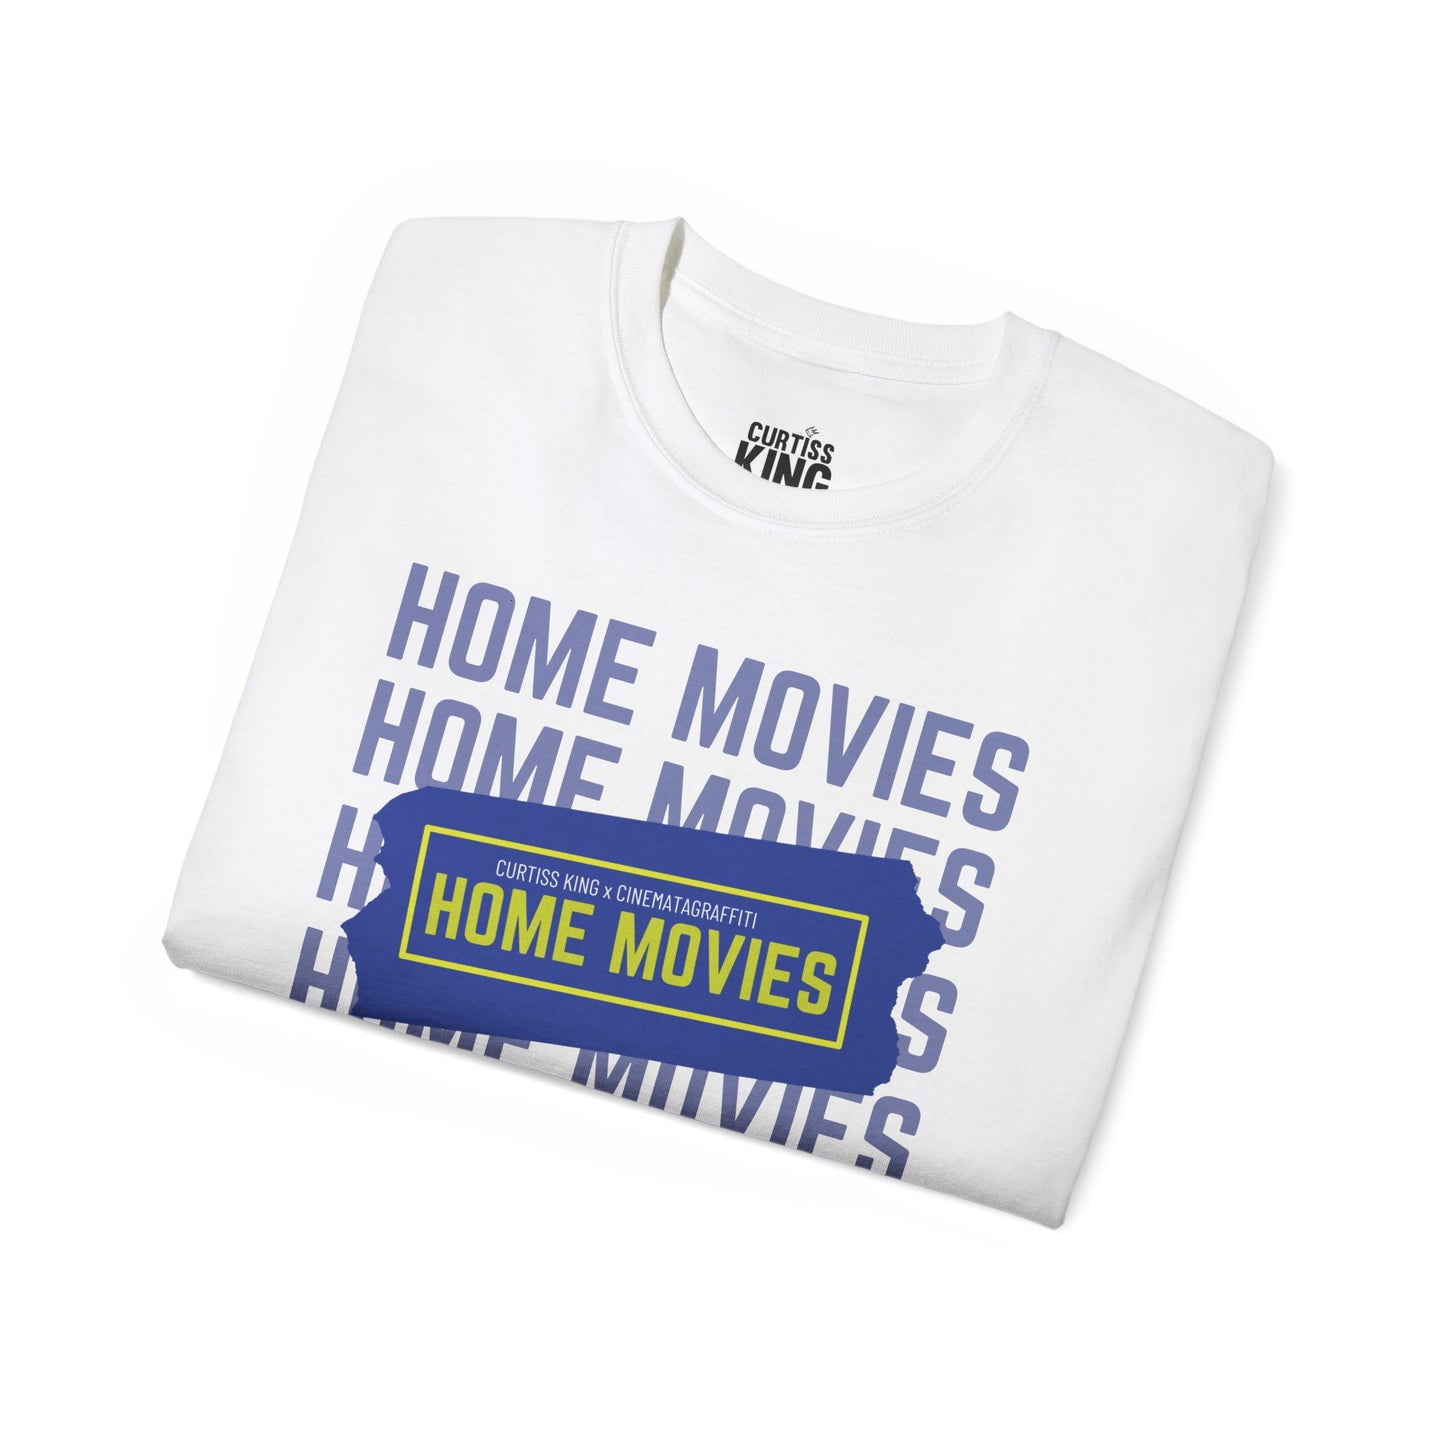 Home Movies Ticket [Light Mode]